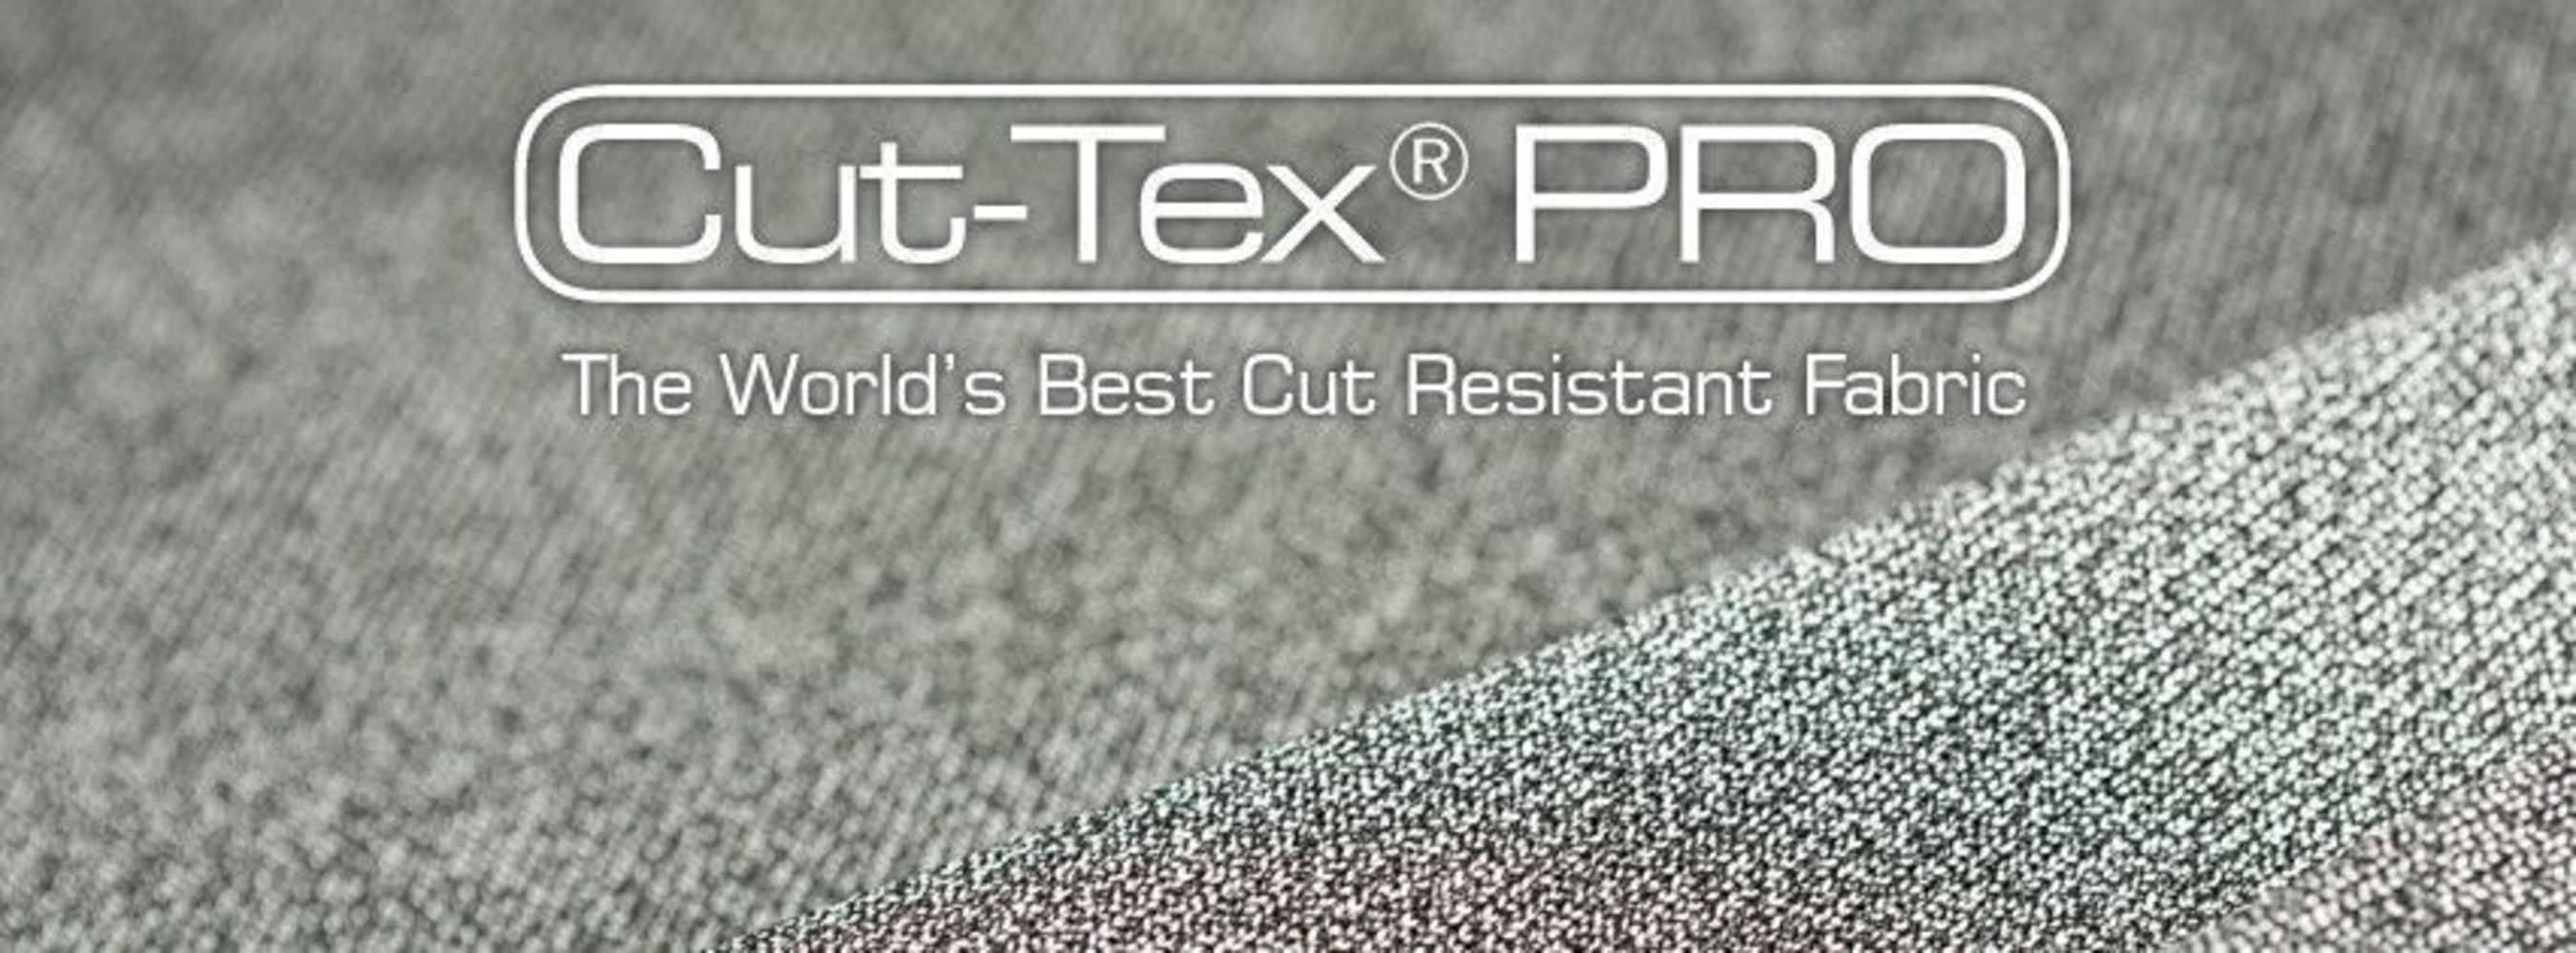 Cut-TexÂ® PRO High Performance Cut Resistant Fabric (PRNewsFoto/PPSS Group)